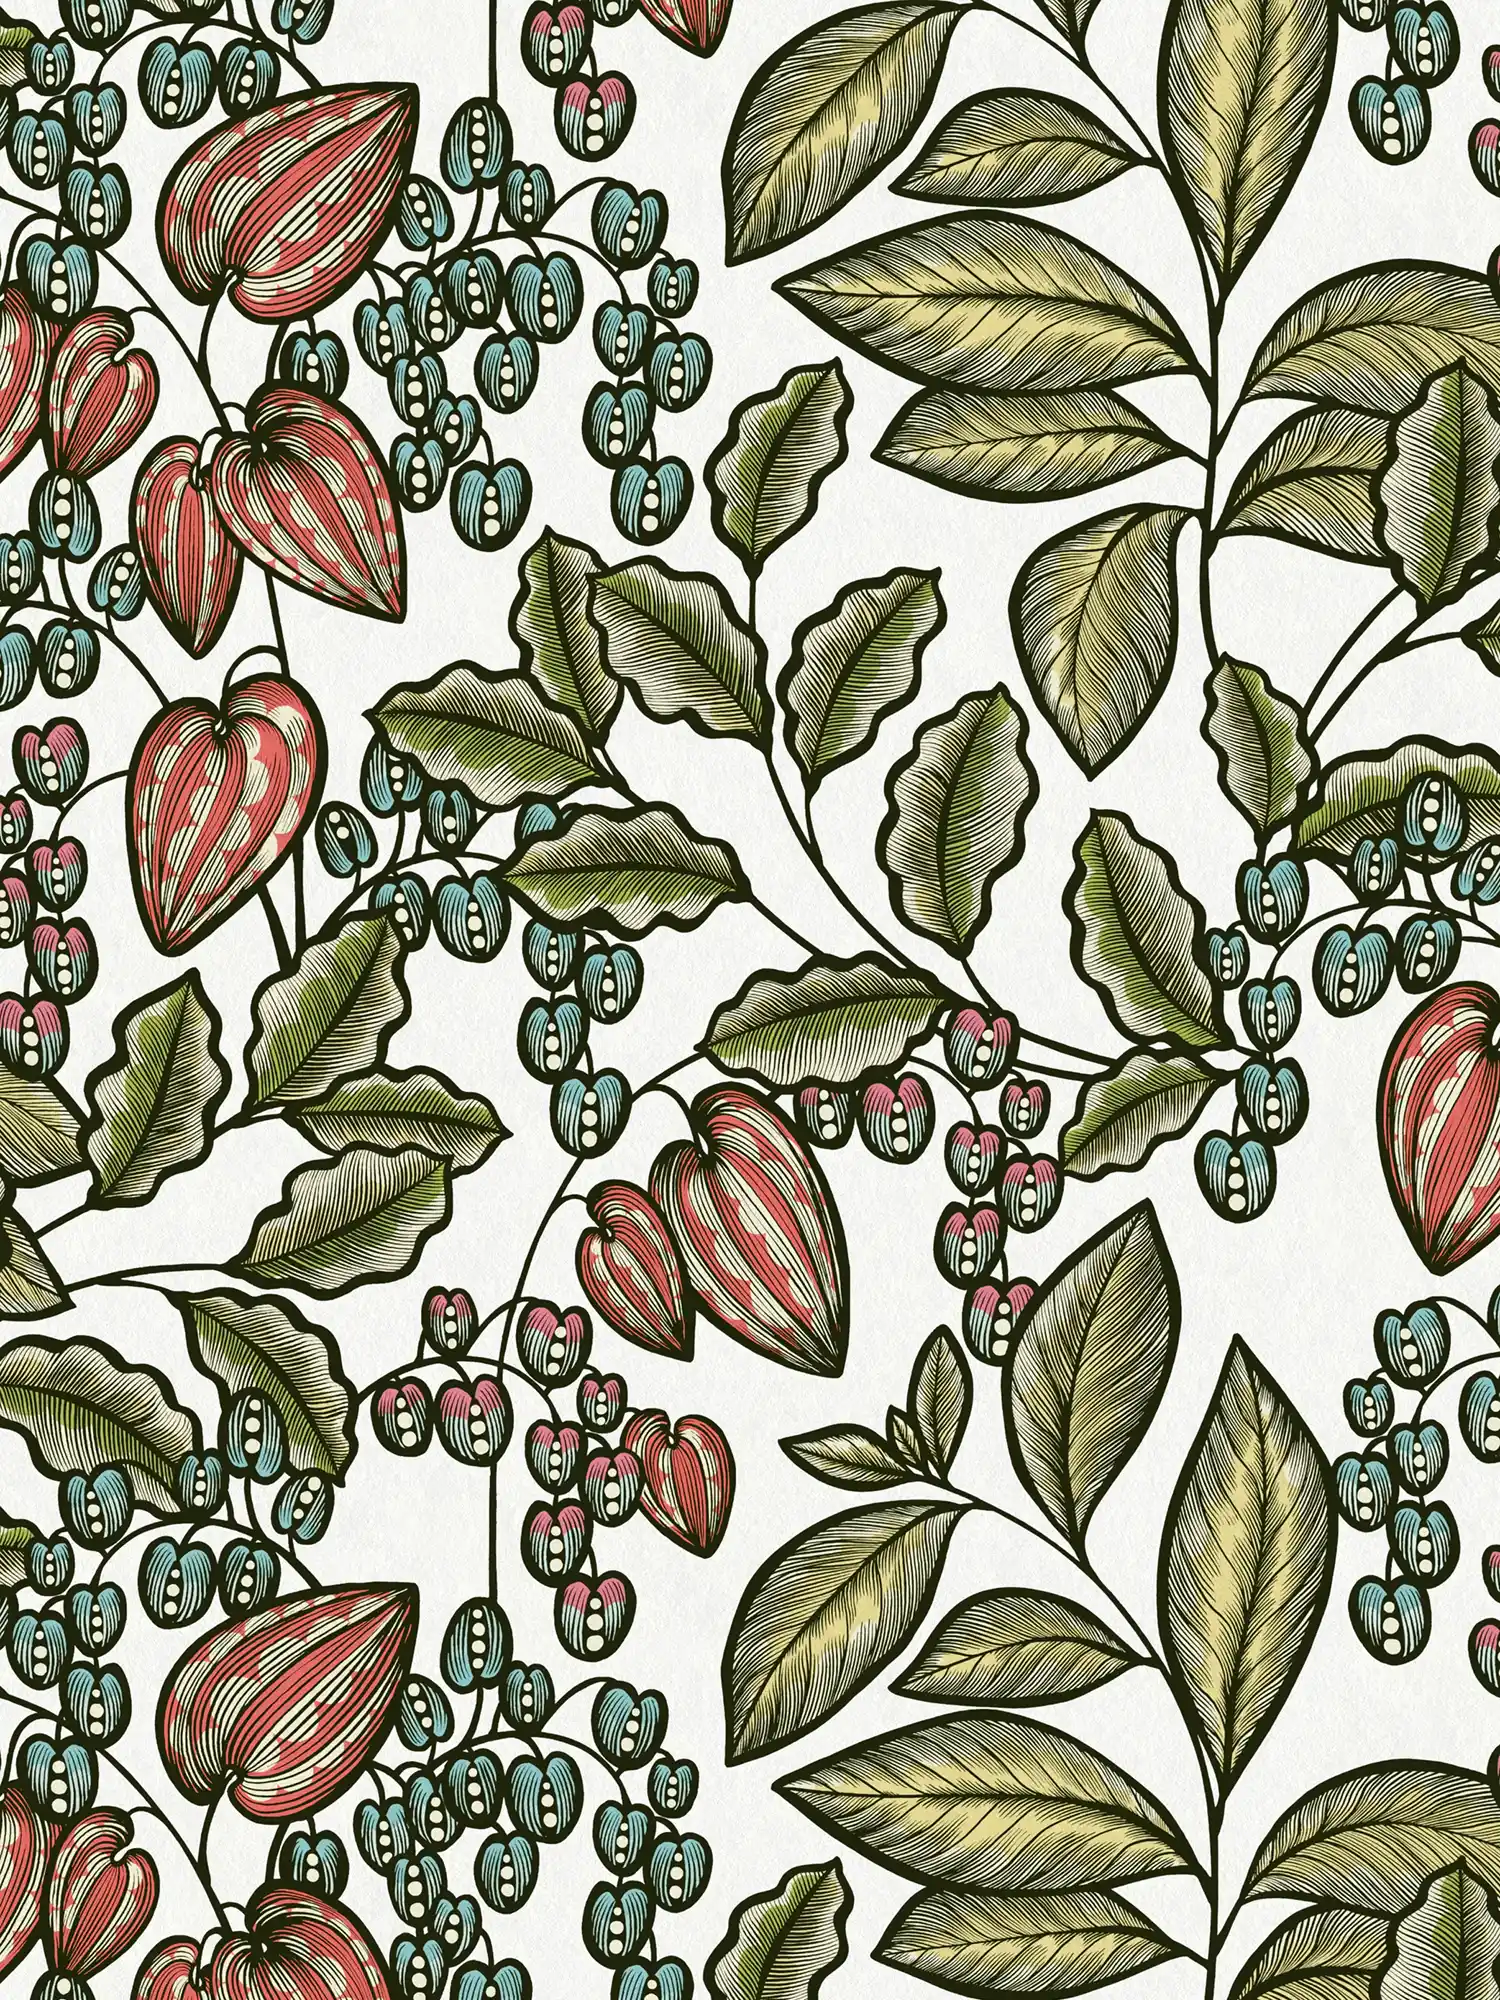         Florale Tapete Natur Design Scandinavian Print – Bunt, Grün, Weiß
    